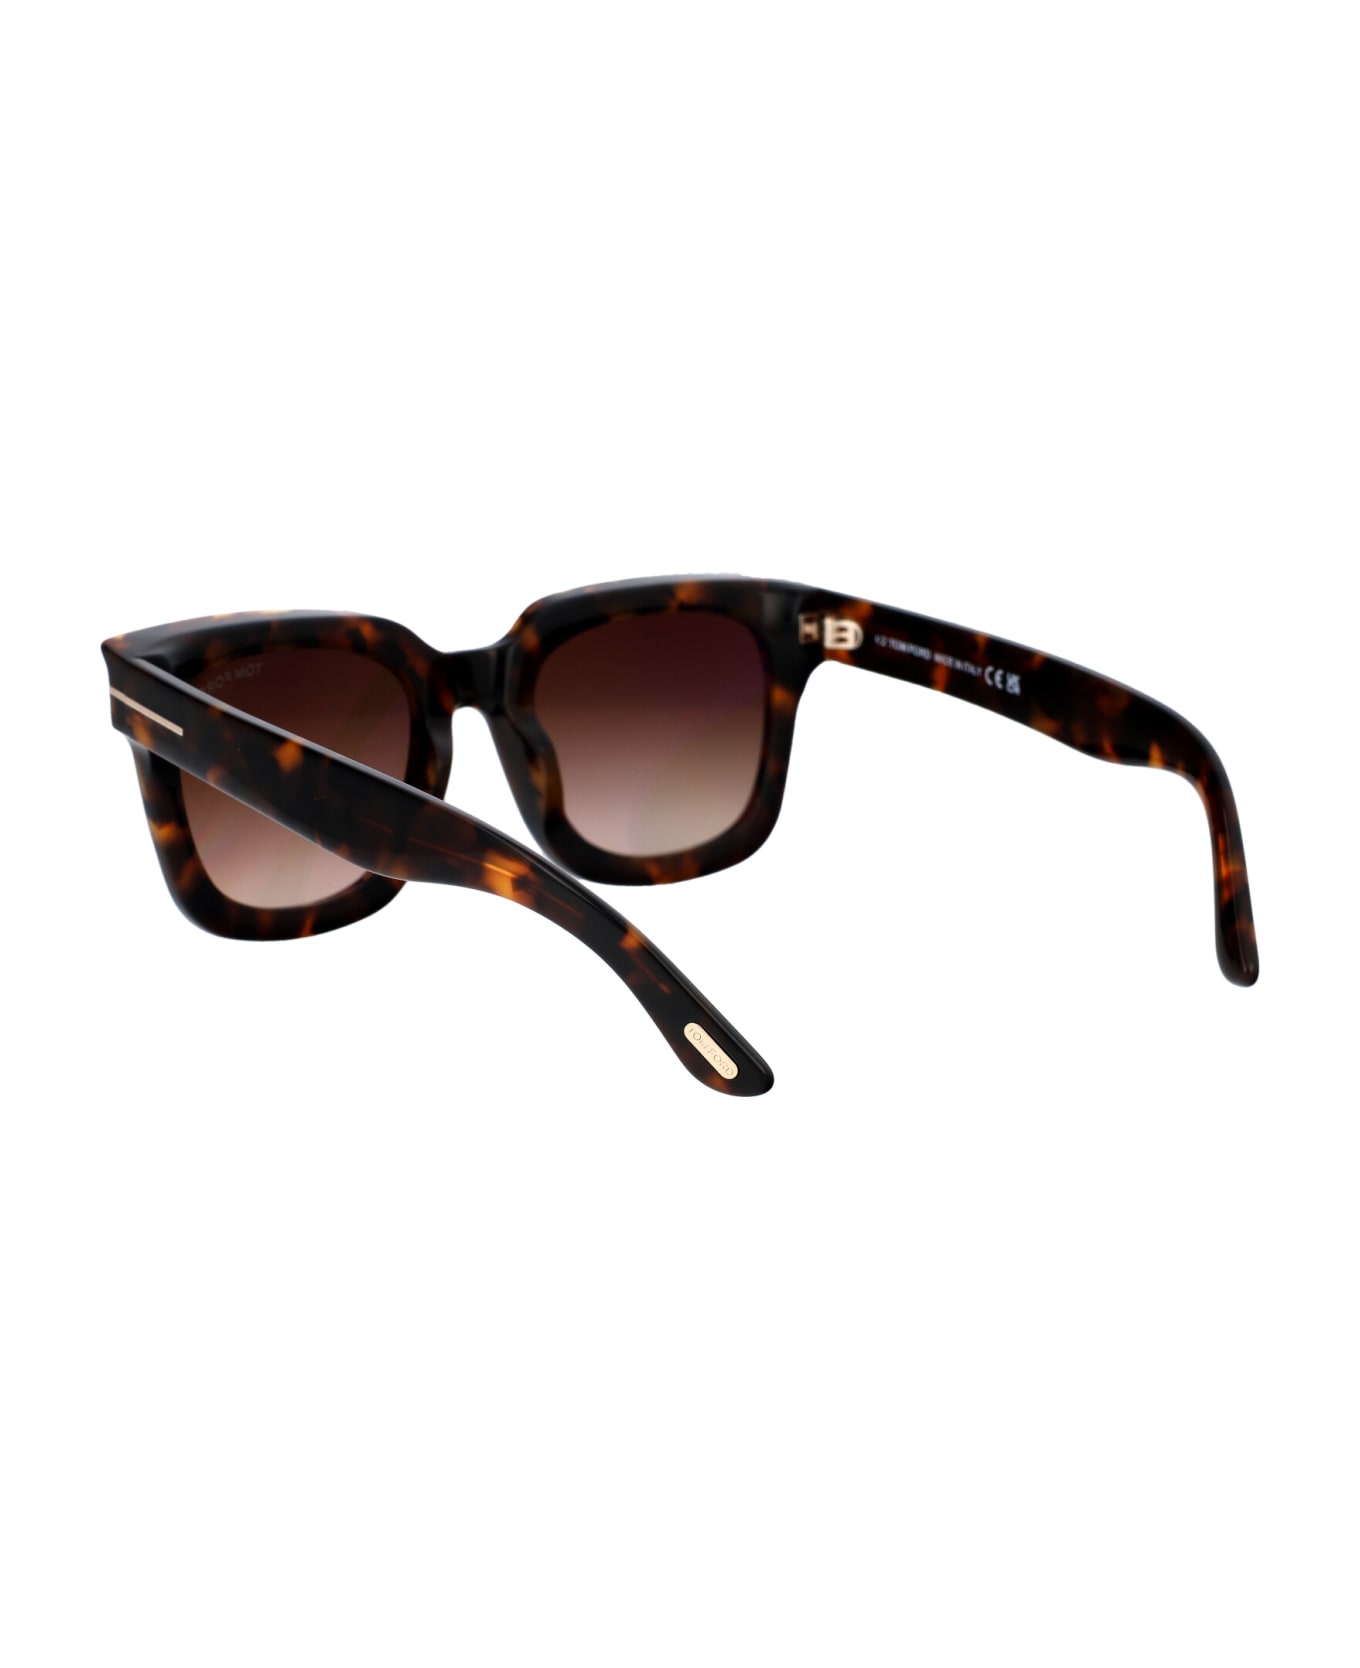 Tom Ford Eyewear Leigh-02 Sunglasses - 52G Avana Scura  / Marrone Specchiato